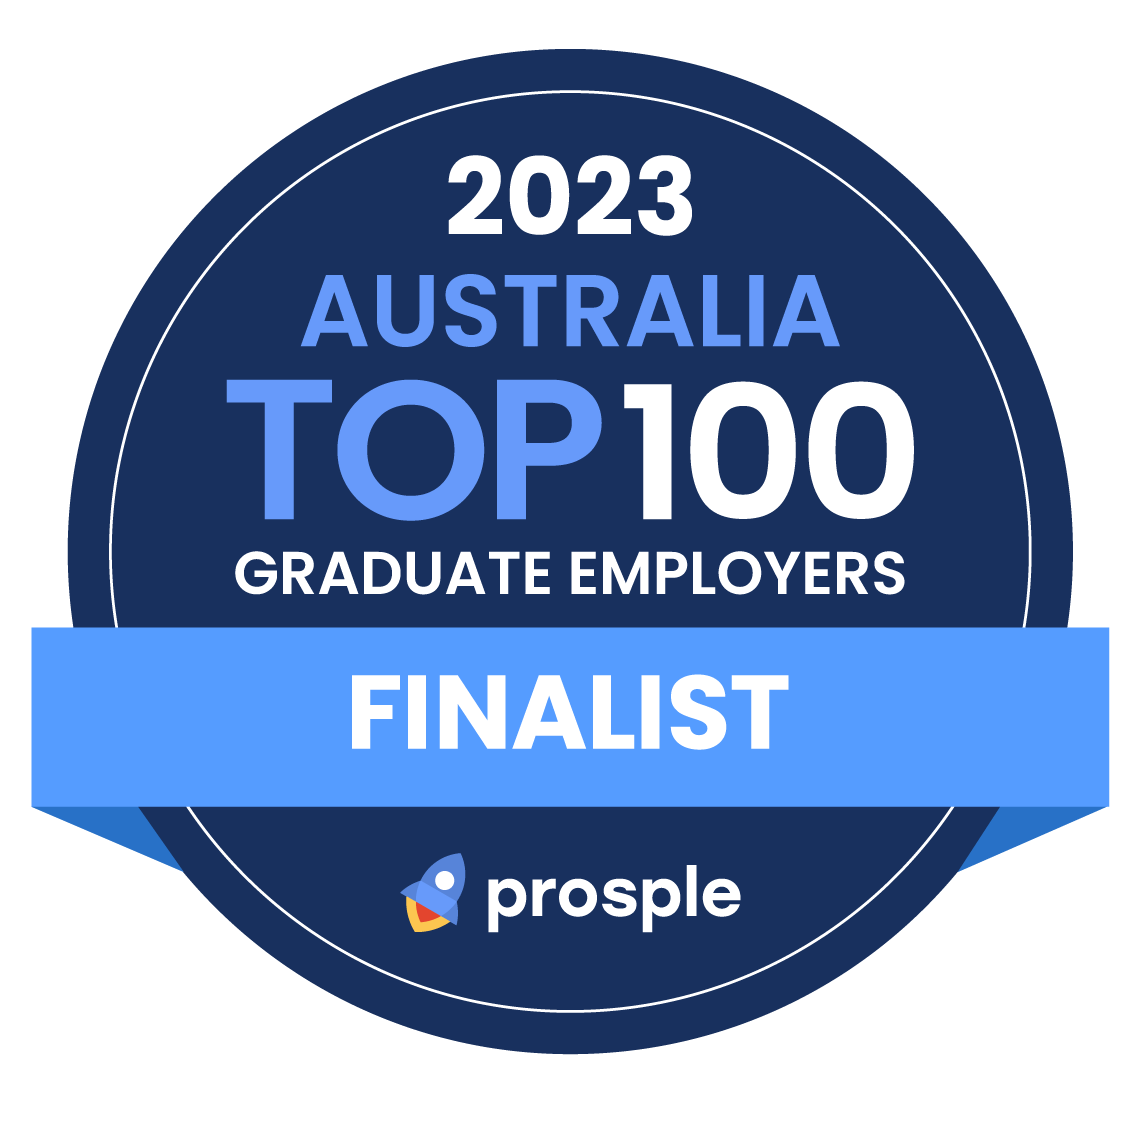 2023 Australia TOP100 Graduate Employers Finalist prosple logo